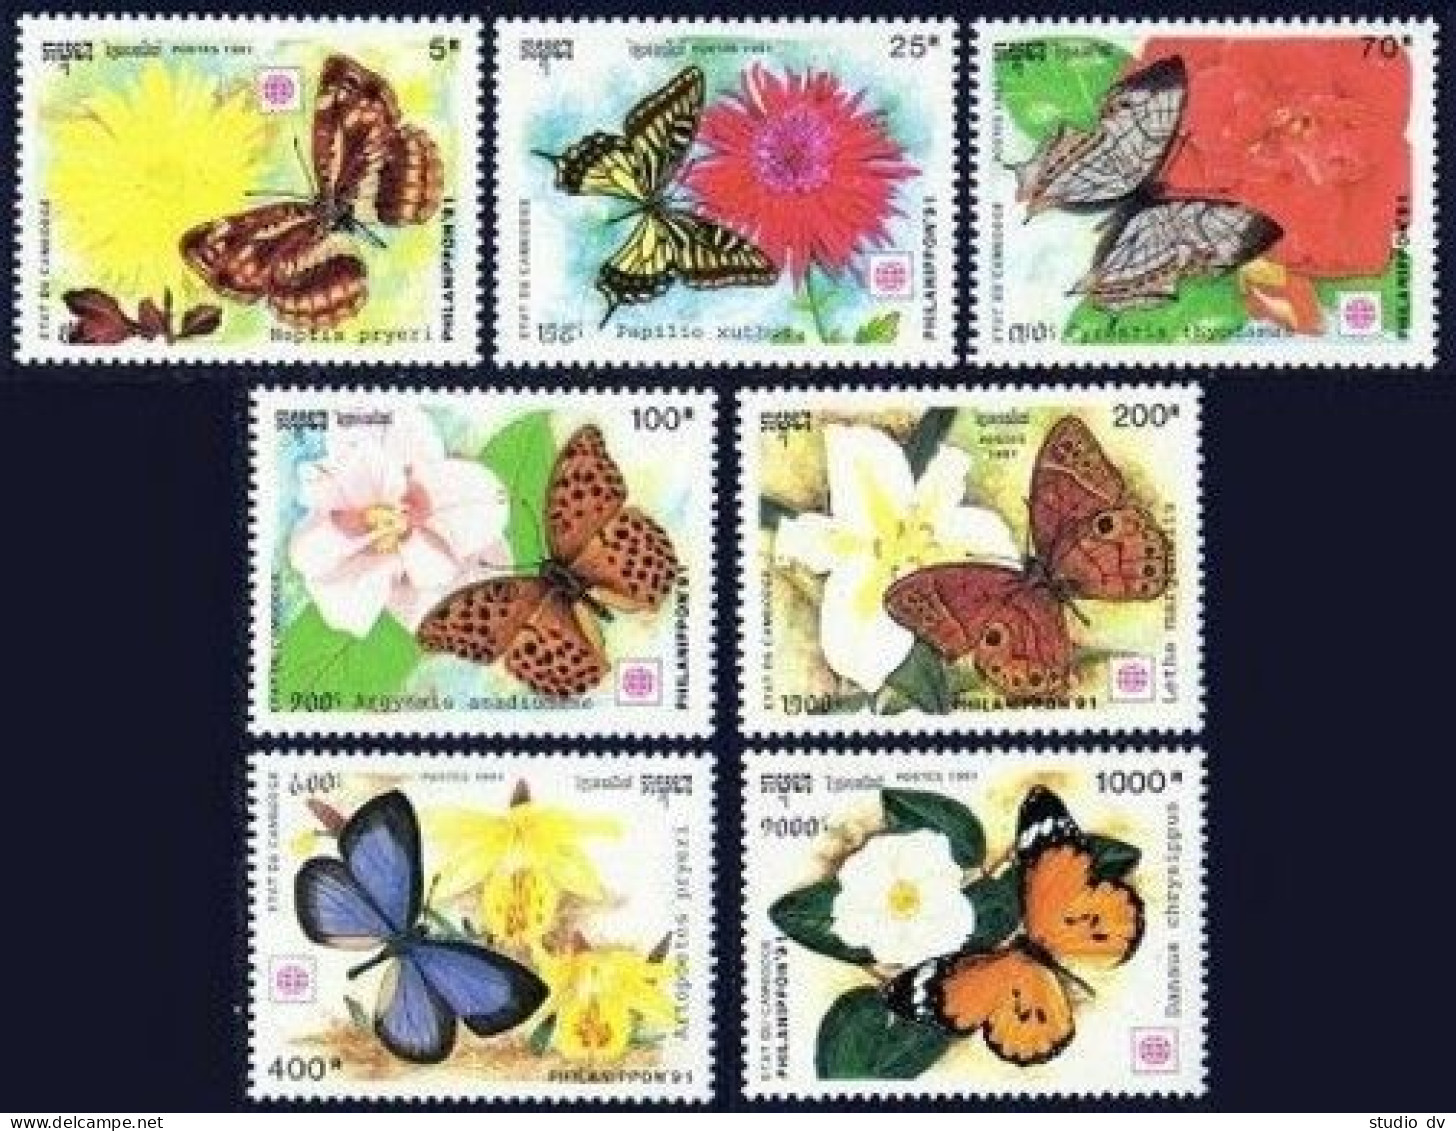 Cambodia 1175-1181,MNH.Michel 1253-1259. PHILANIPPON-1991,Butterflies,Flowers. - Kambodscha